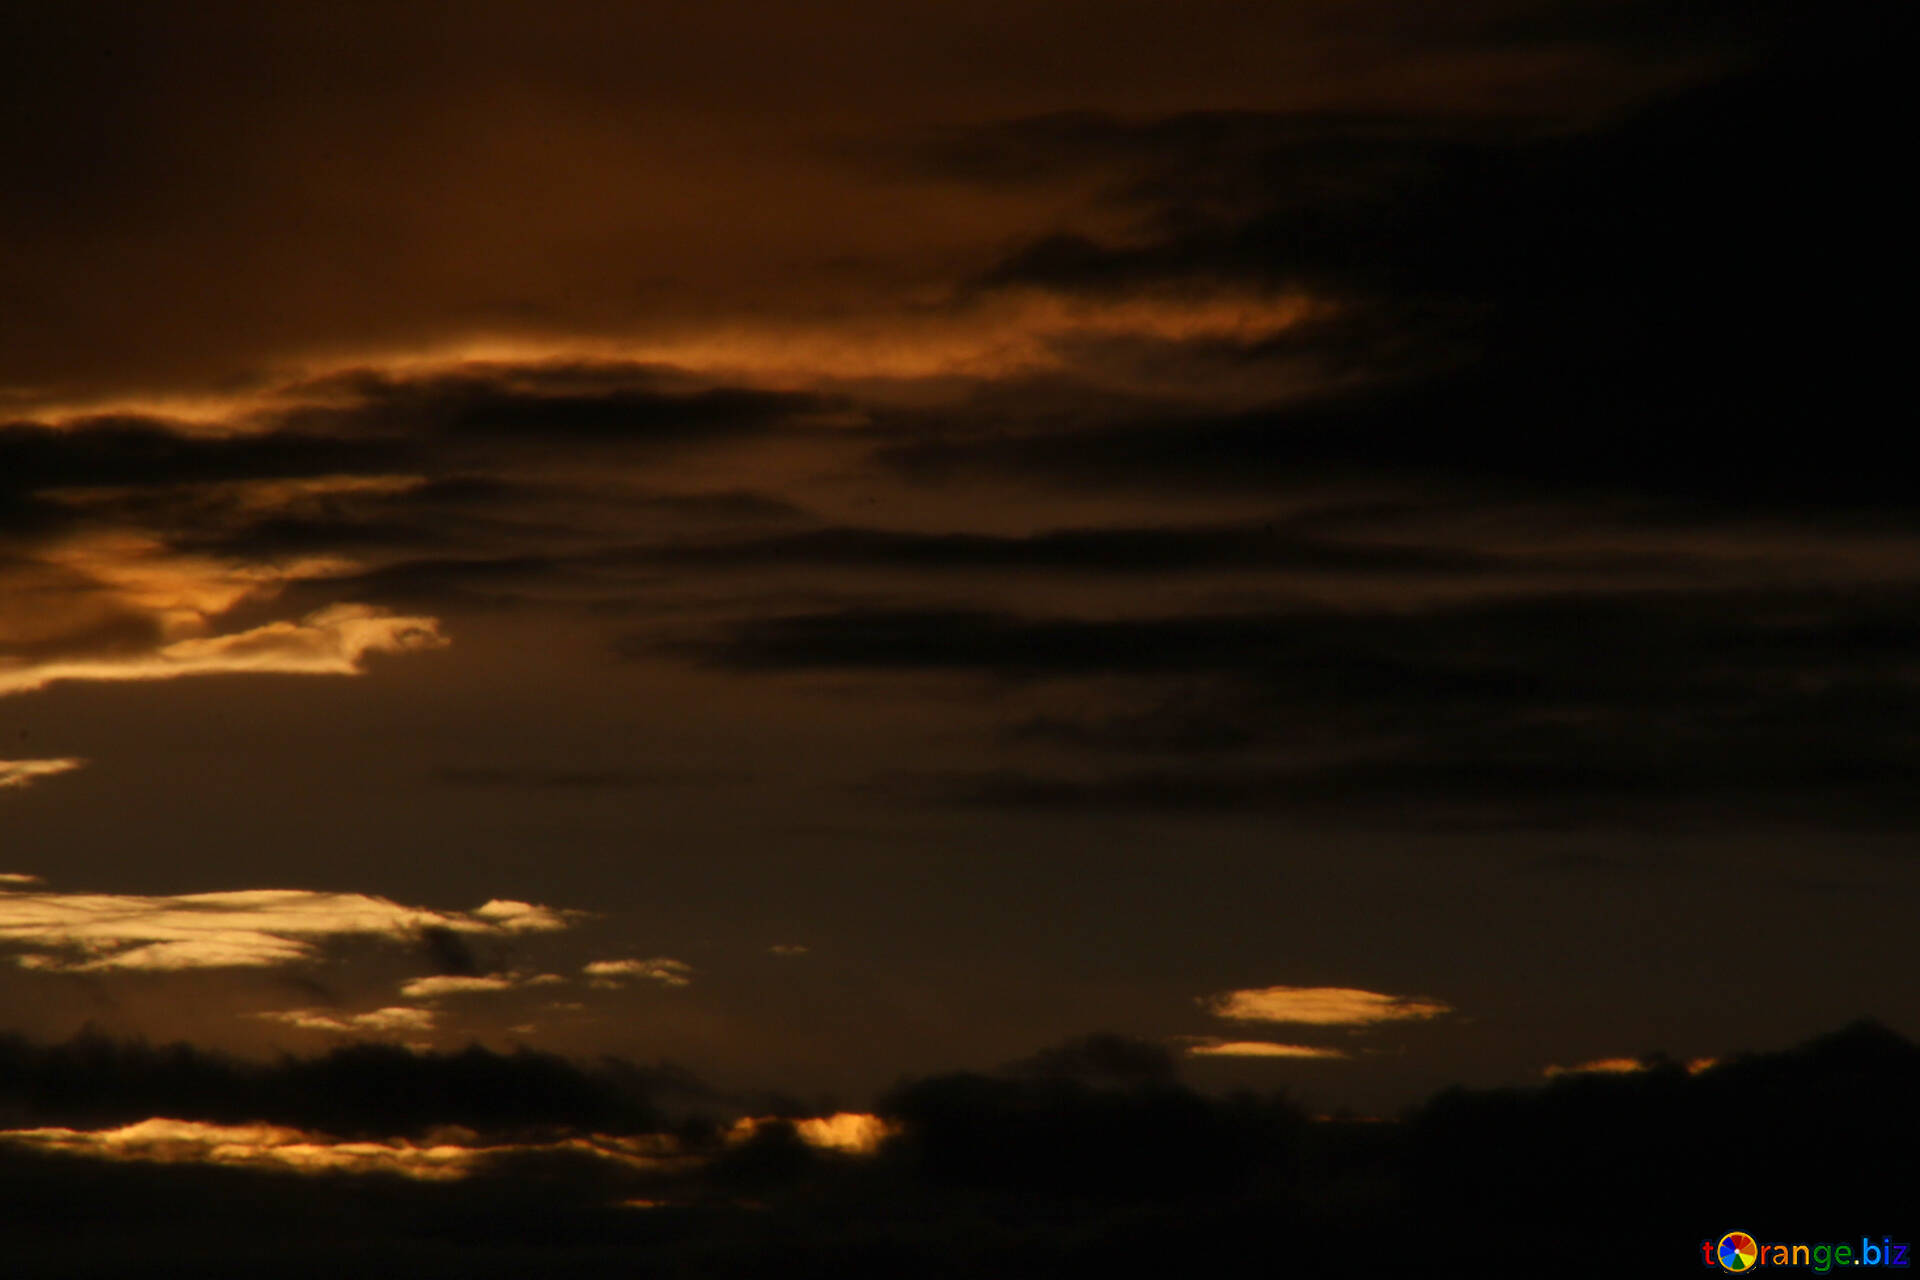 Sunset Sky Image Ominous Sky Image Sunset № 2034. Torange.biz Free Pics On Cc By License